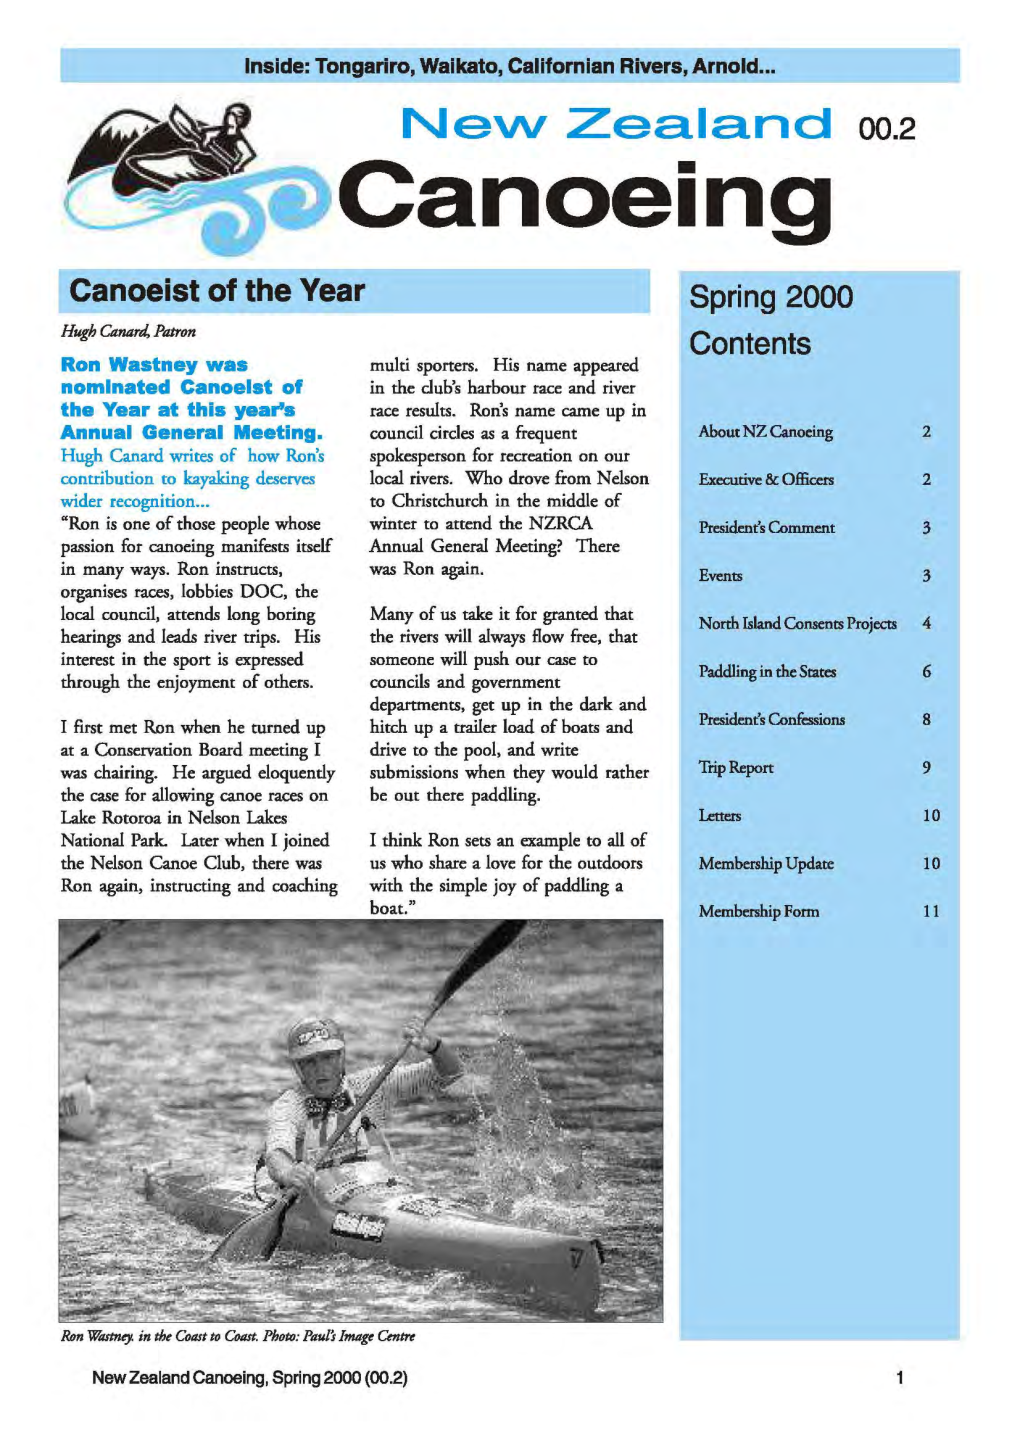 NZ Canoeing Bulletin